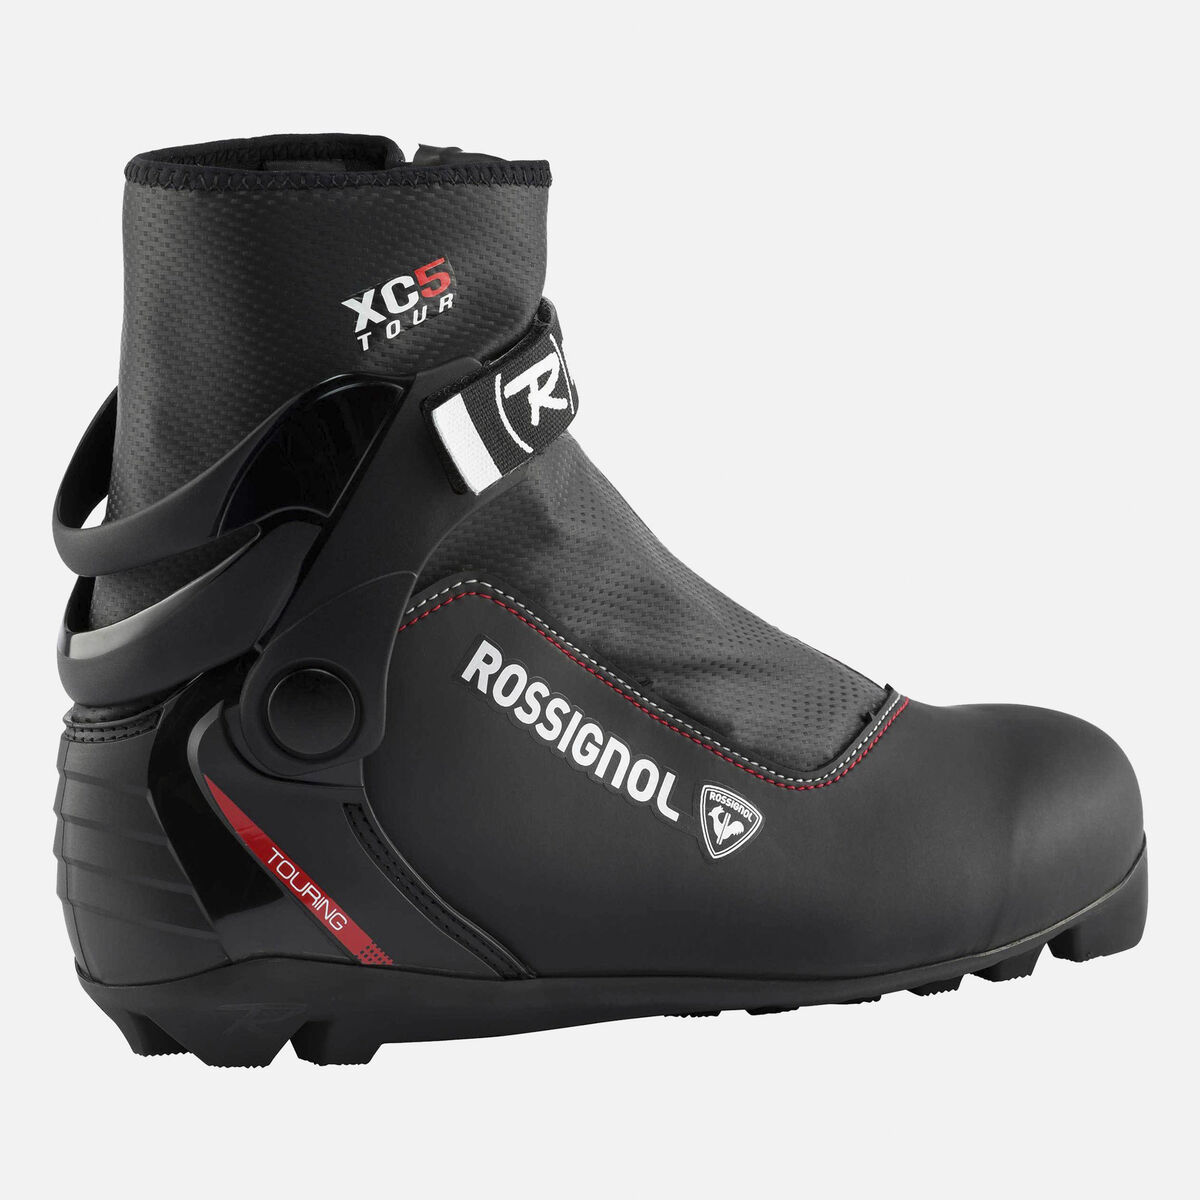 Chaussures de ski nordique touring Unisexee XC-5